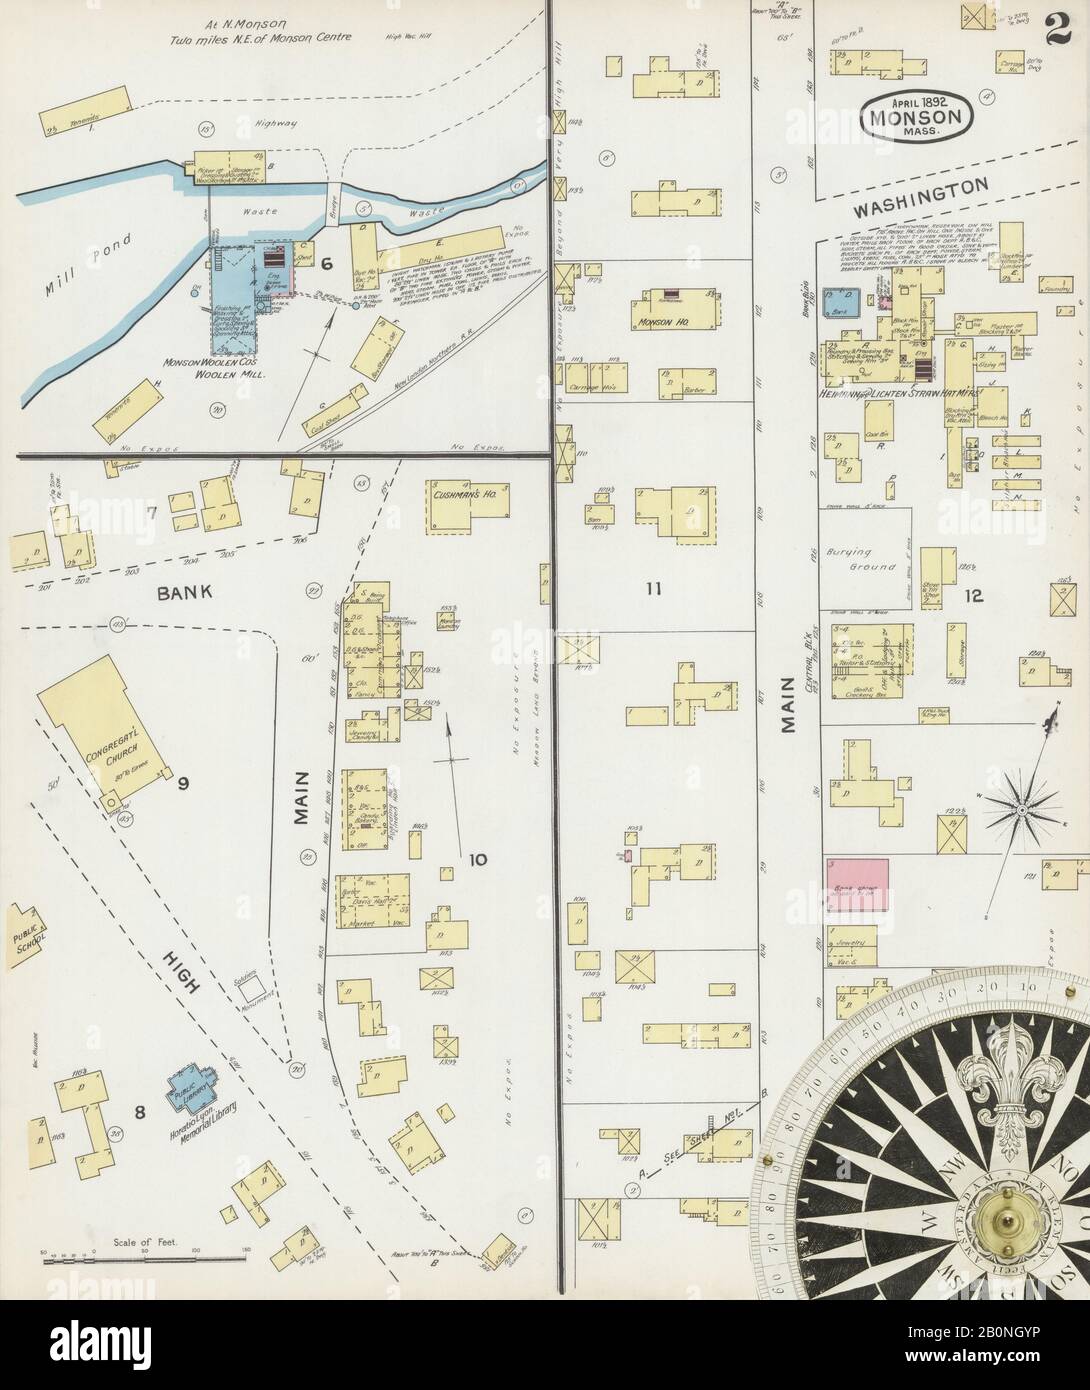 Bild 2 von Sanborn Fire Insurance Map aus Monson, Hampden County, Massachusetts. Apr. 3 Blatt(e), Amerika, Straßenkarte mit einem Kompass Aus Dem 19. Jahrhundert Stockfoto